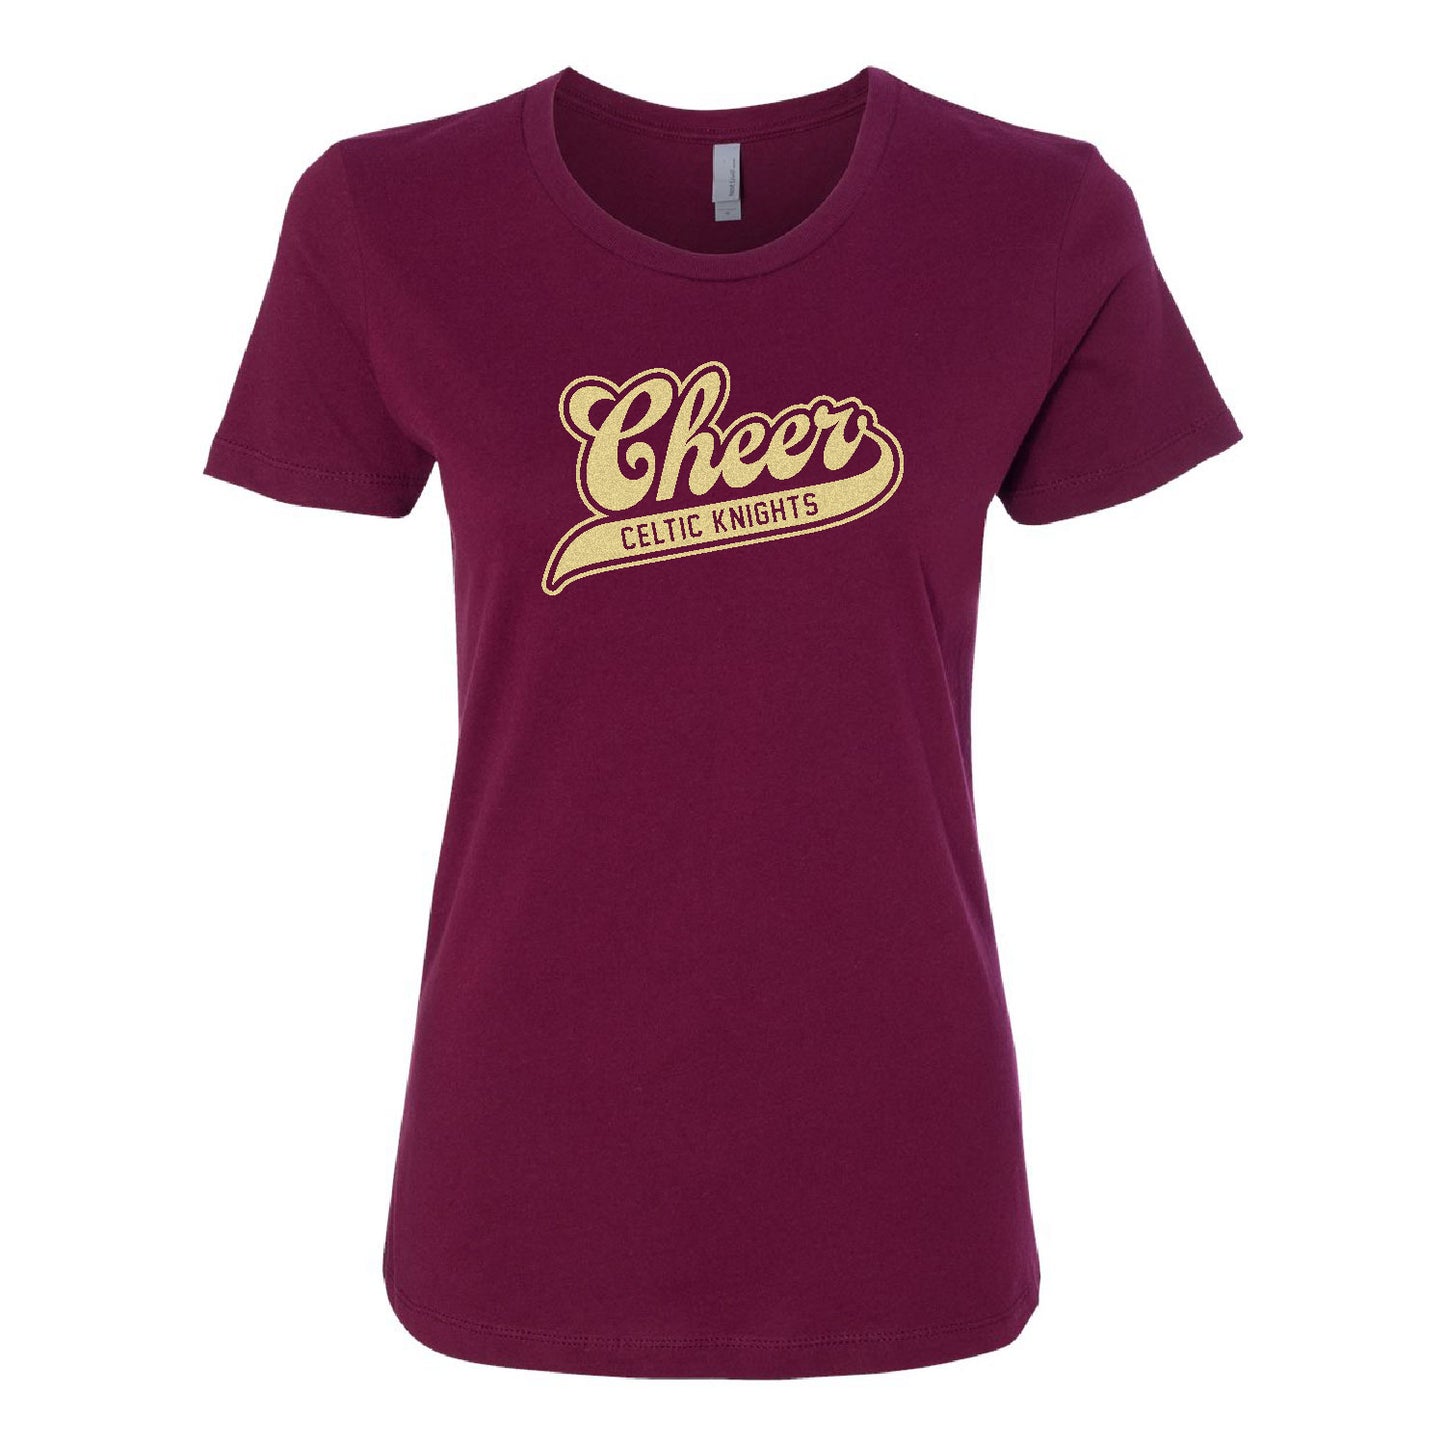 Celtic Knights Cheer| Premium Women's Cotton T-Shirt